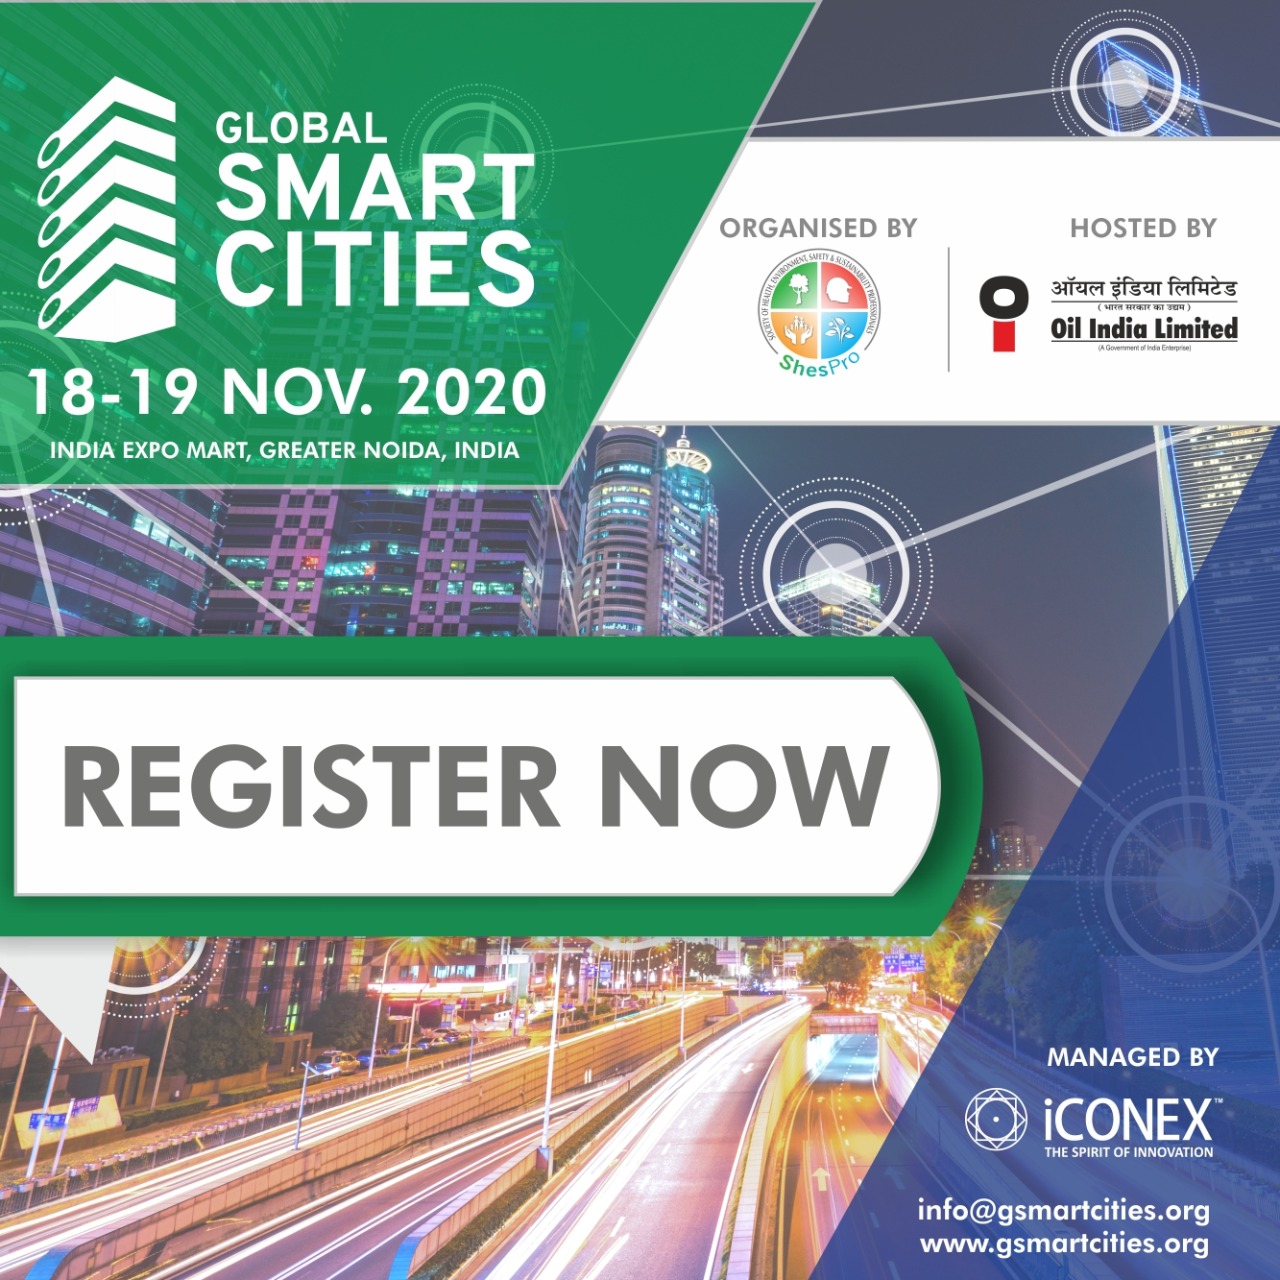 Global Smart Cities India 2020 expo ,18-19 Nov. 2020 | New Smart Cities in India | India Expo Mart | Greater Noida, Gautam Buddh Nagar, Uttar Pradesh, India